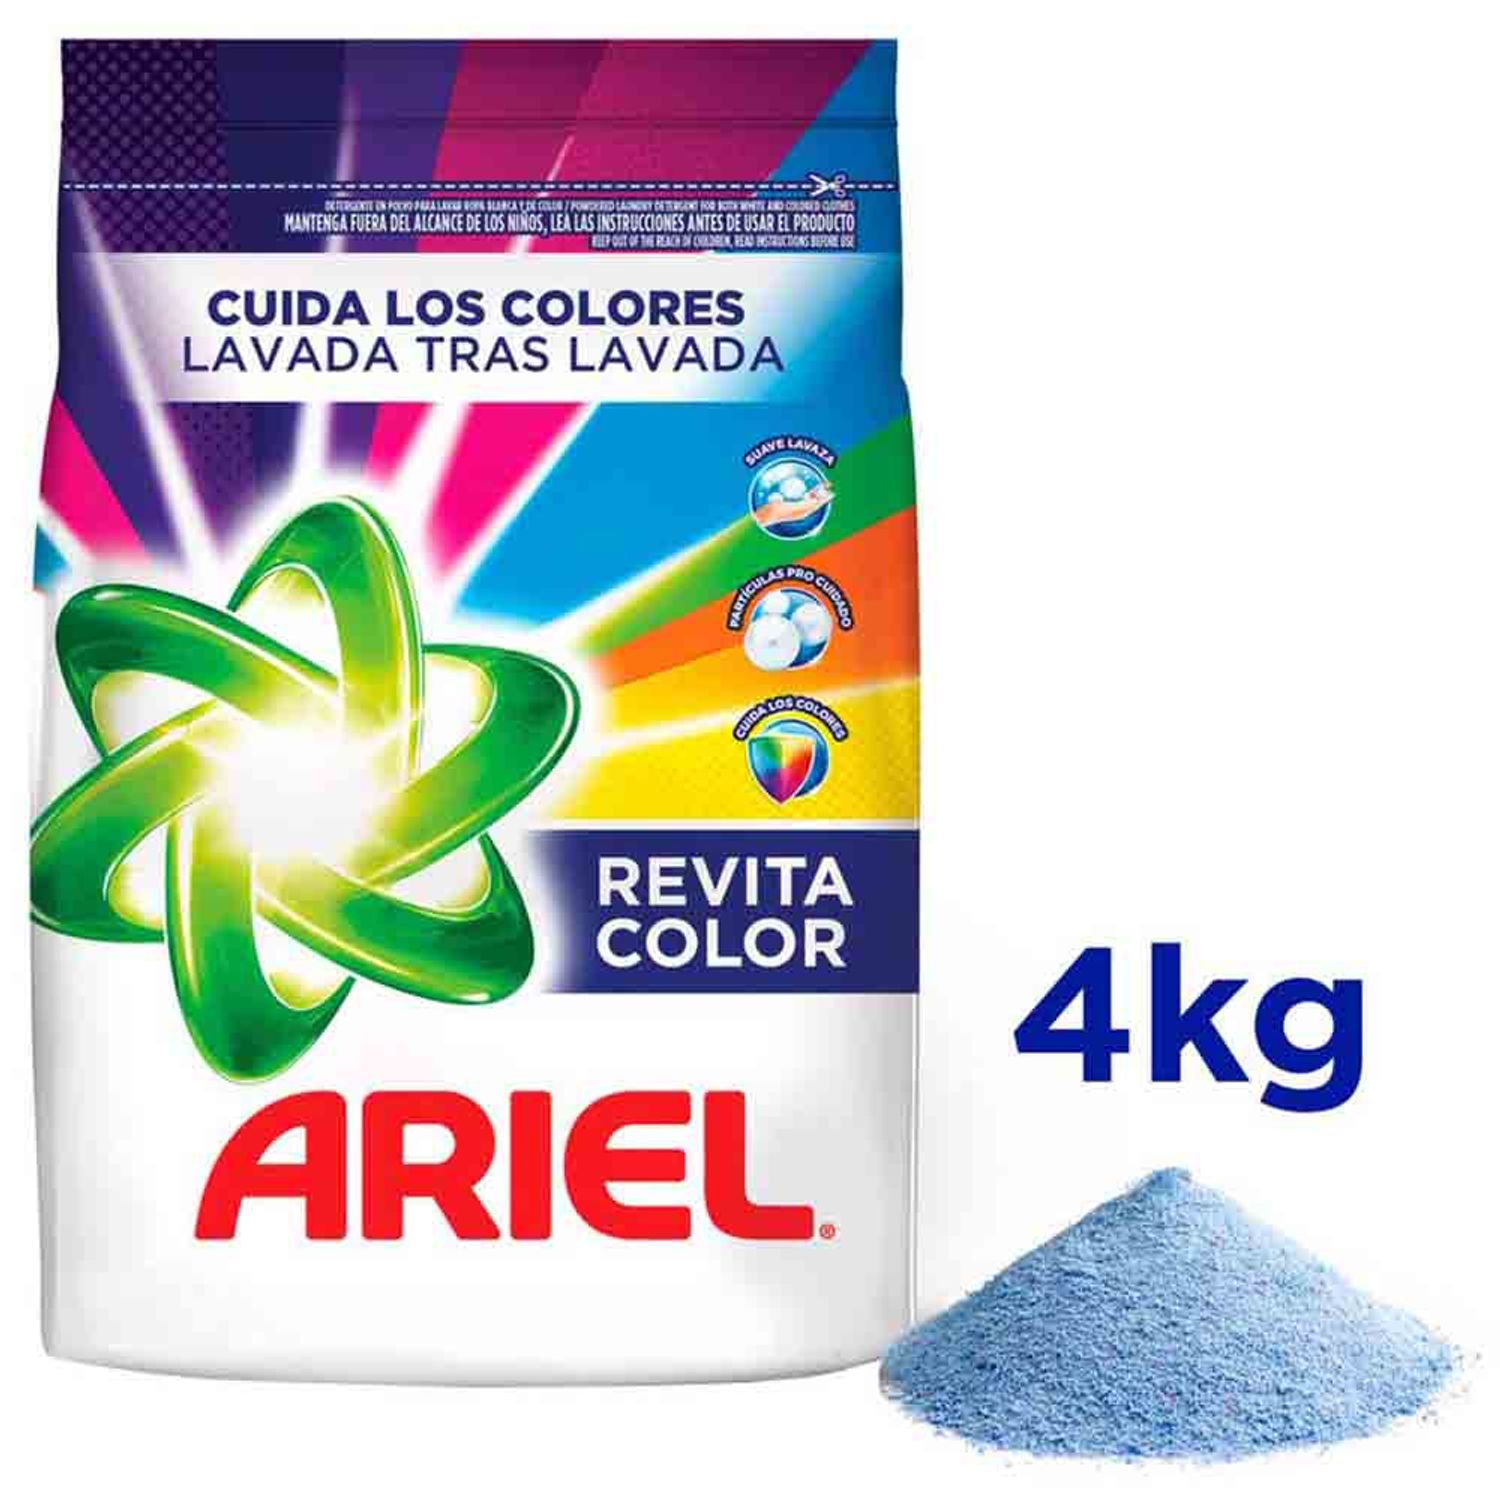 Detergente en Polvo ARIEL Revitacolor Bolsa 4Kg